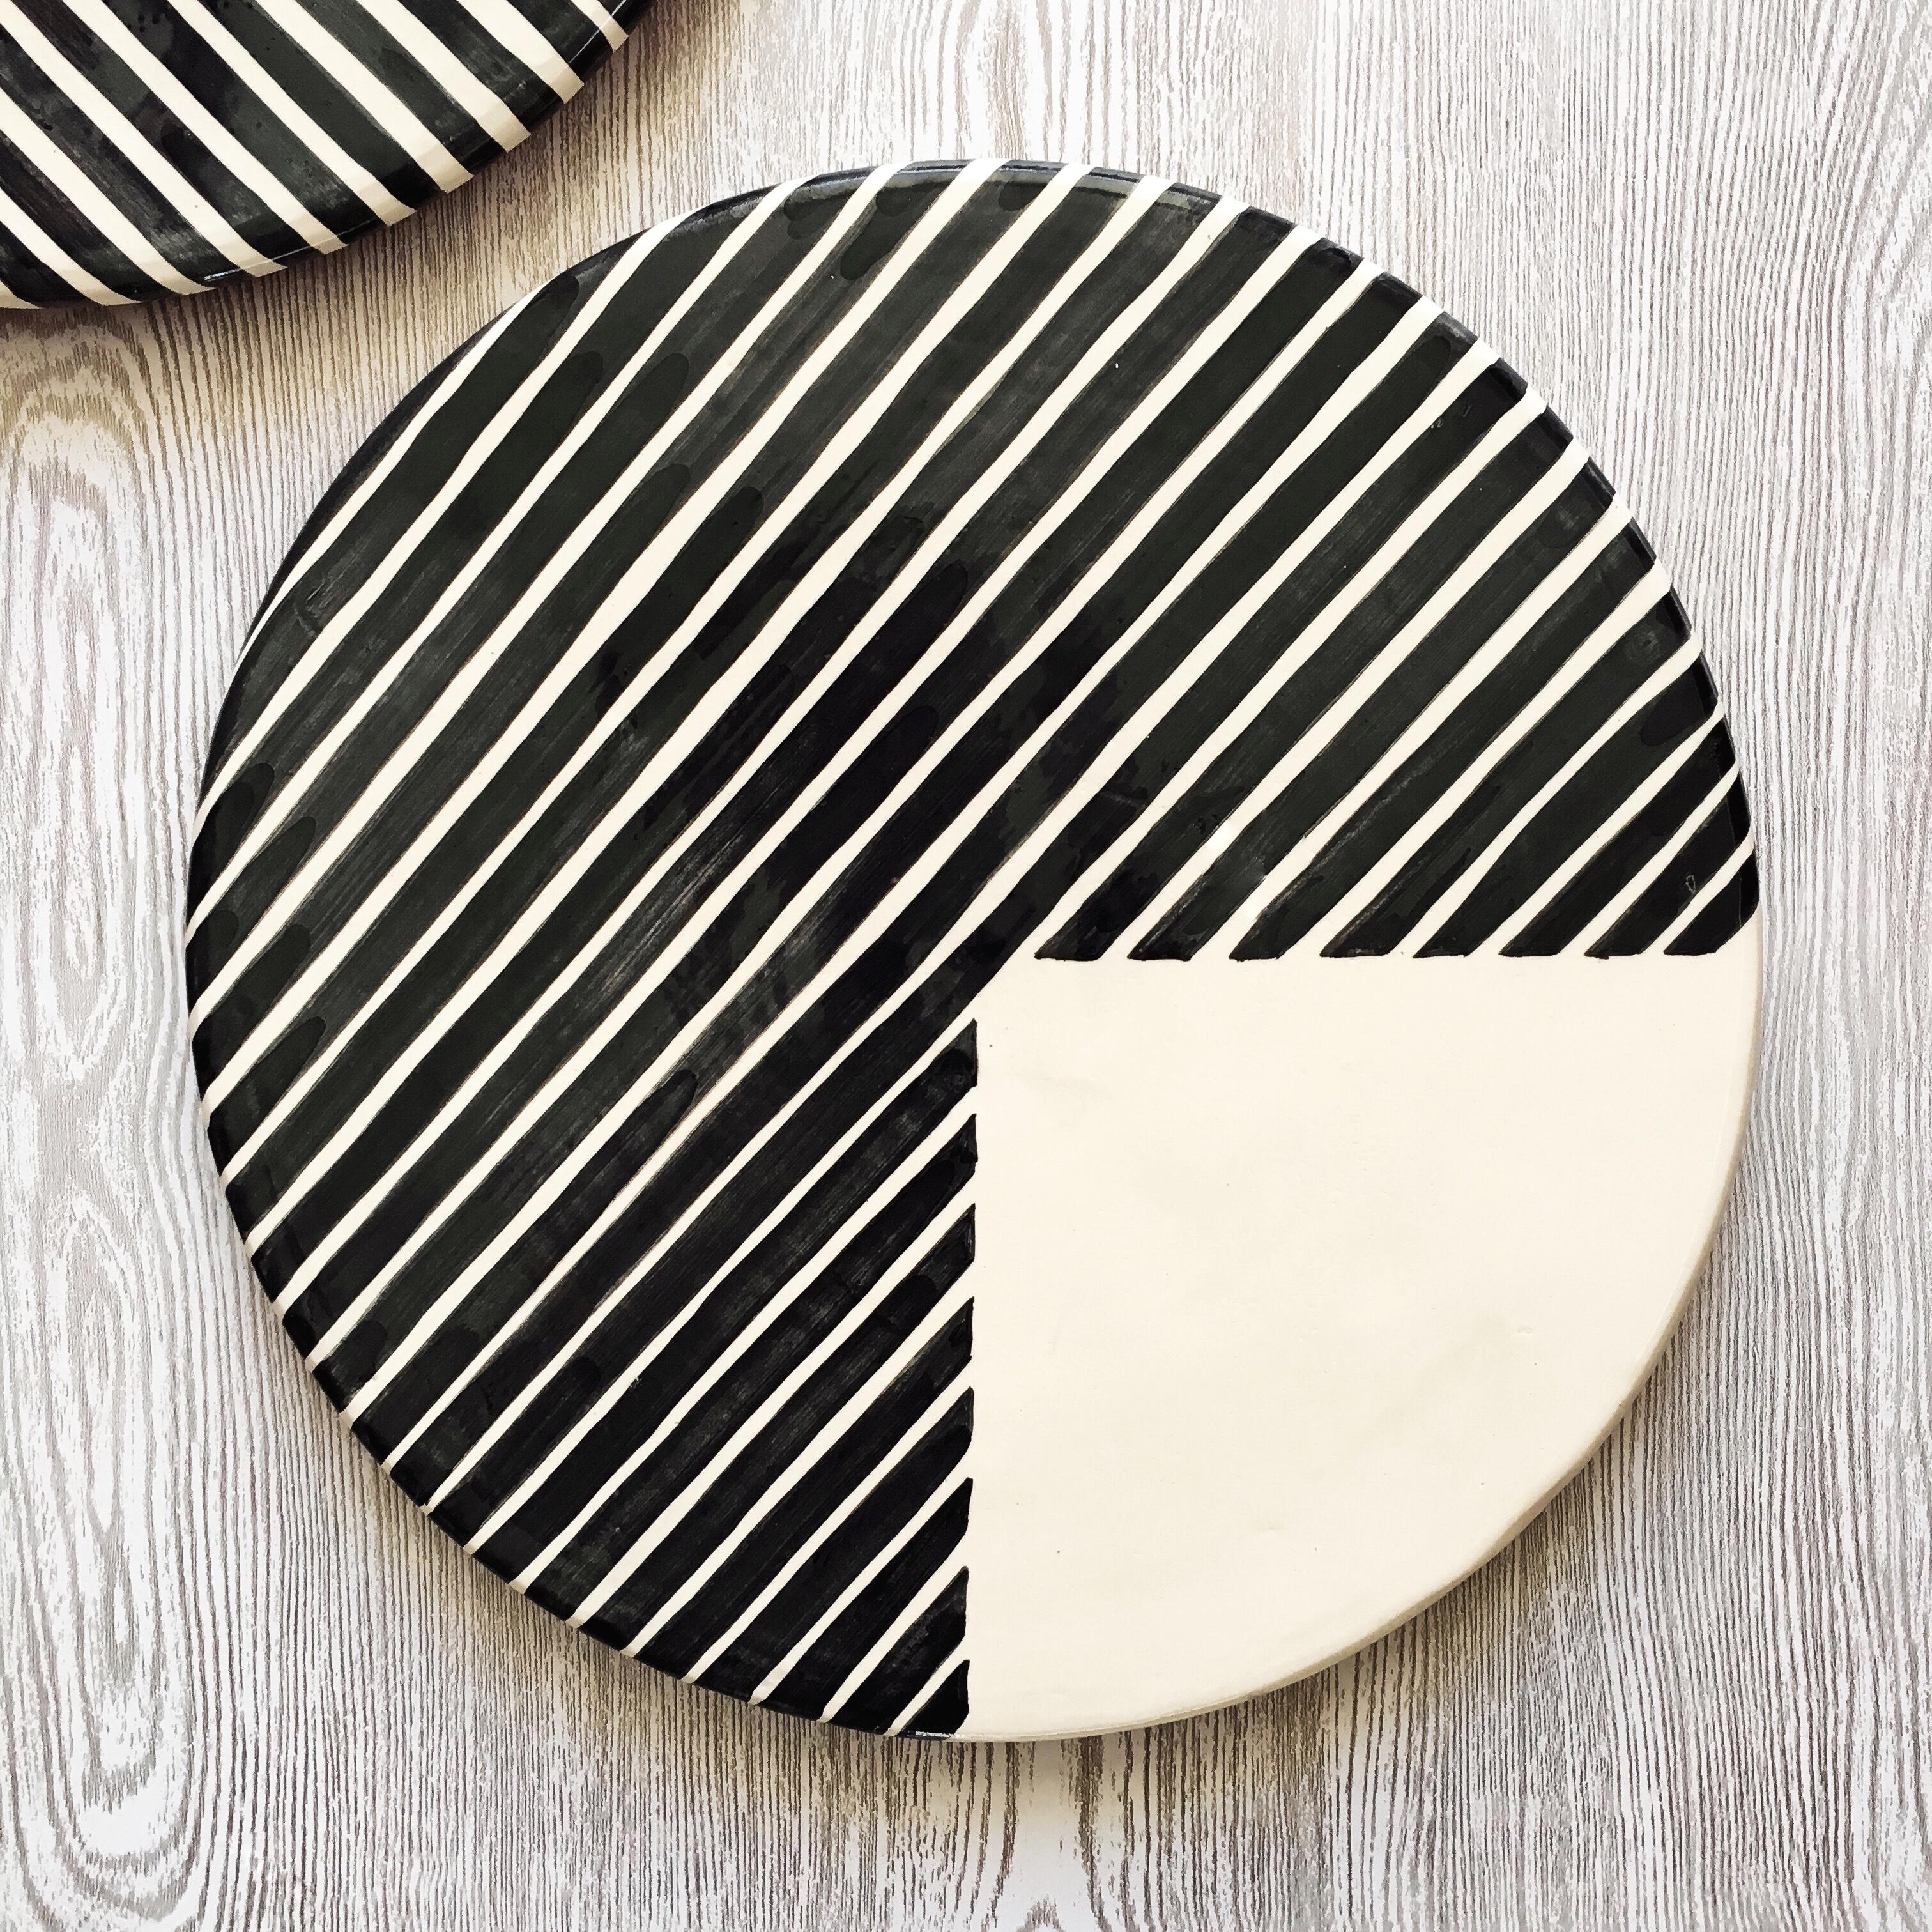 Portuguese Handmade Ceramic Black and White 3/4 Stripe Pattern Serving Platter, in Stock For Sale